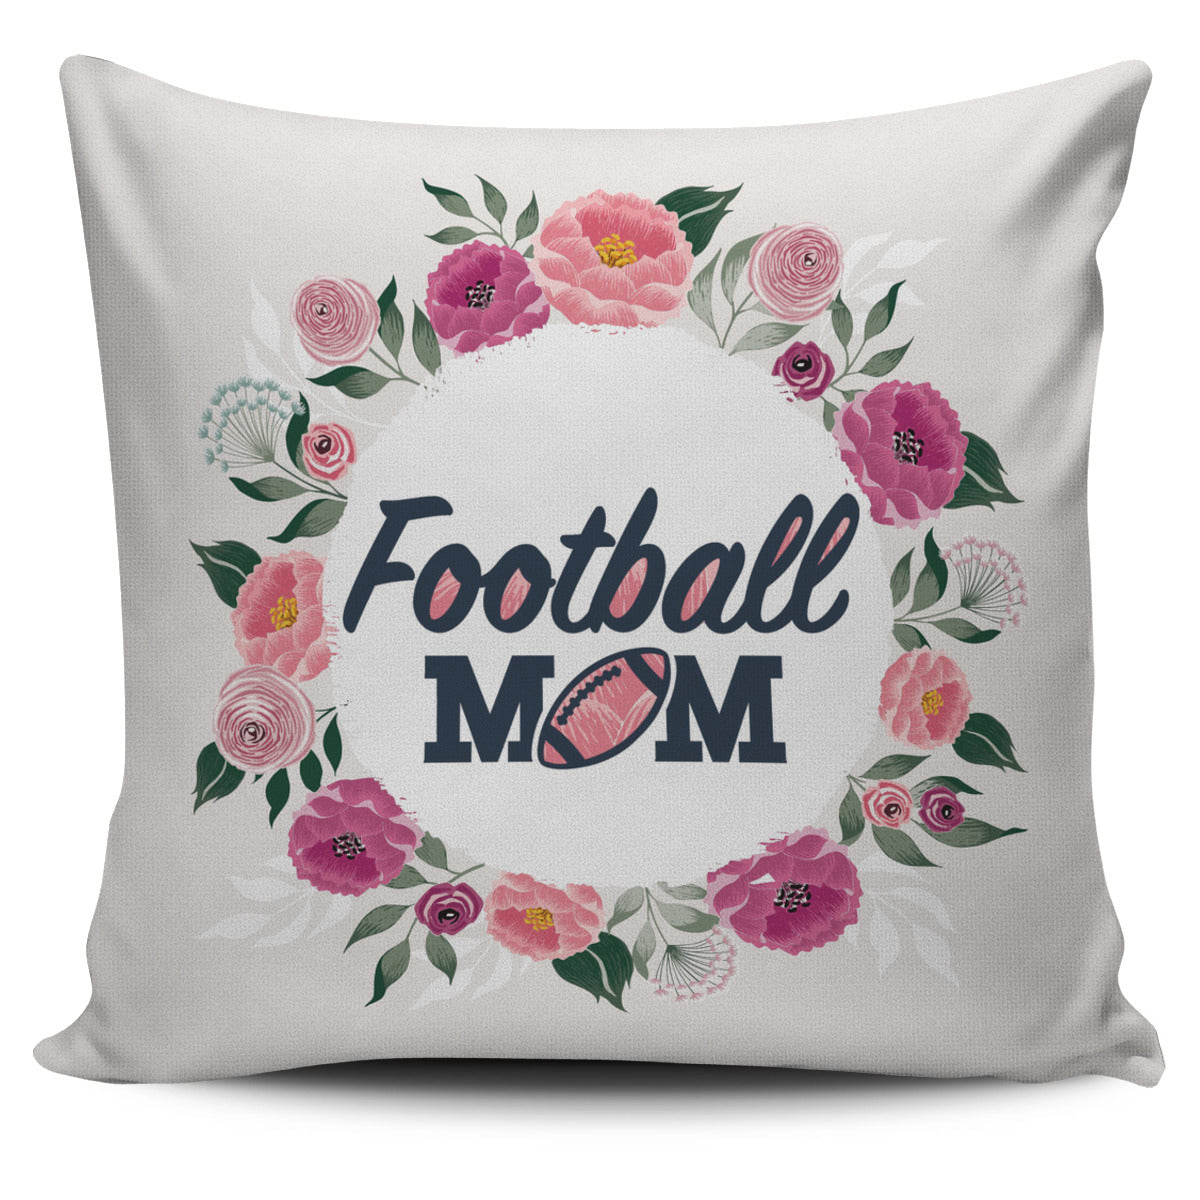 Football Mom Pillow Cover